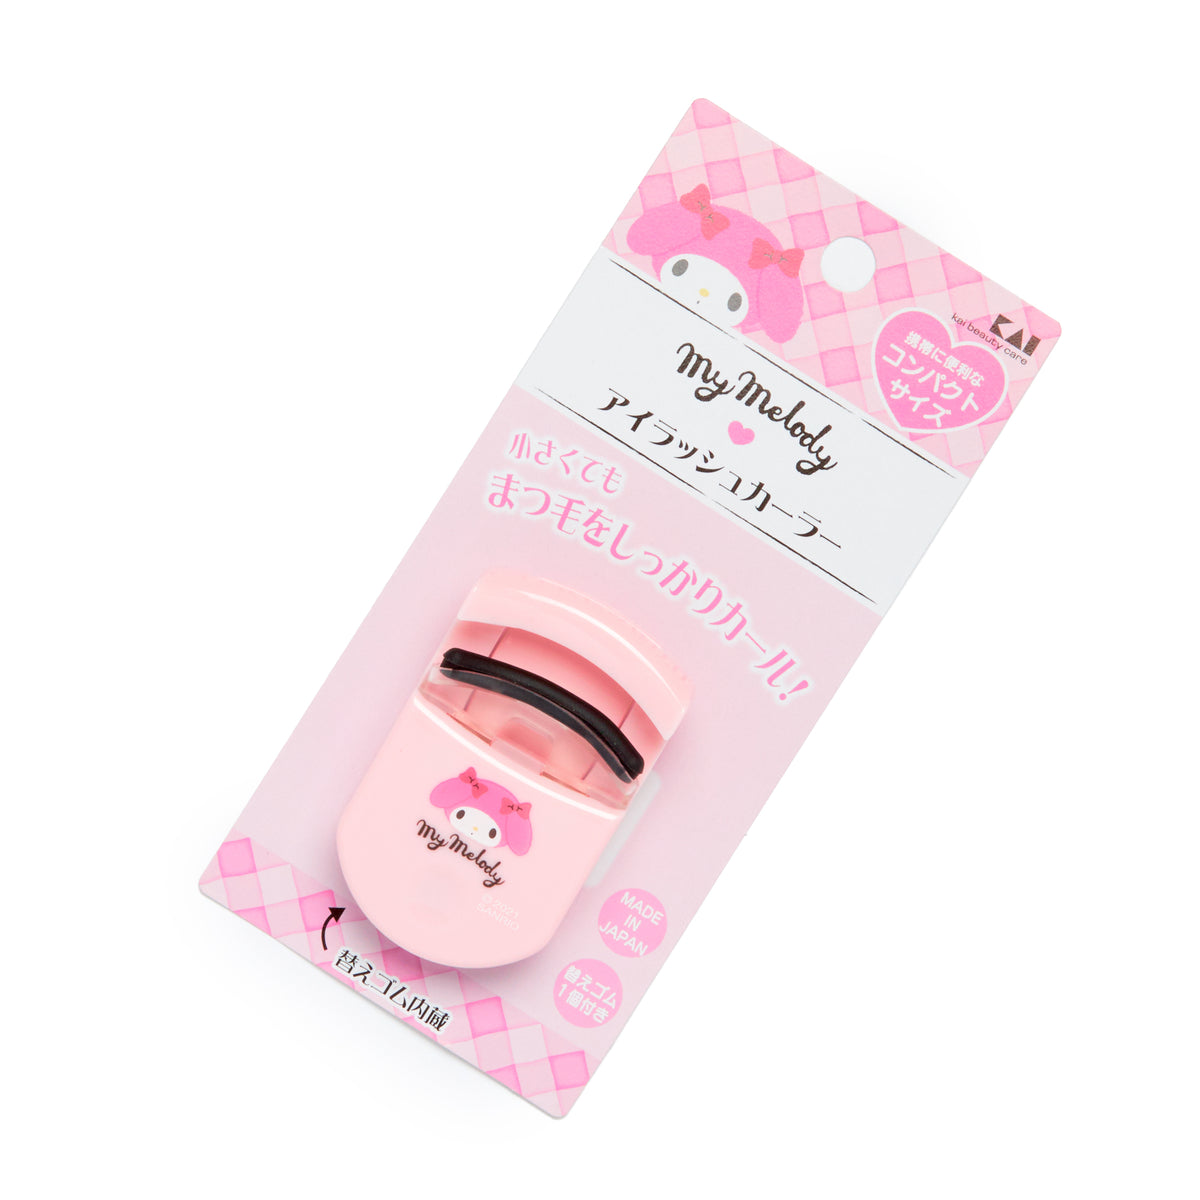 My Melody KAI Beauty Care Eyelash Curler Beauty Japan Original   